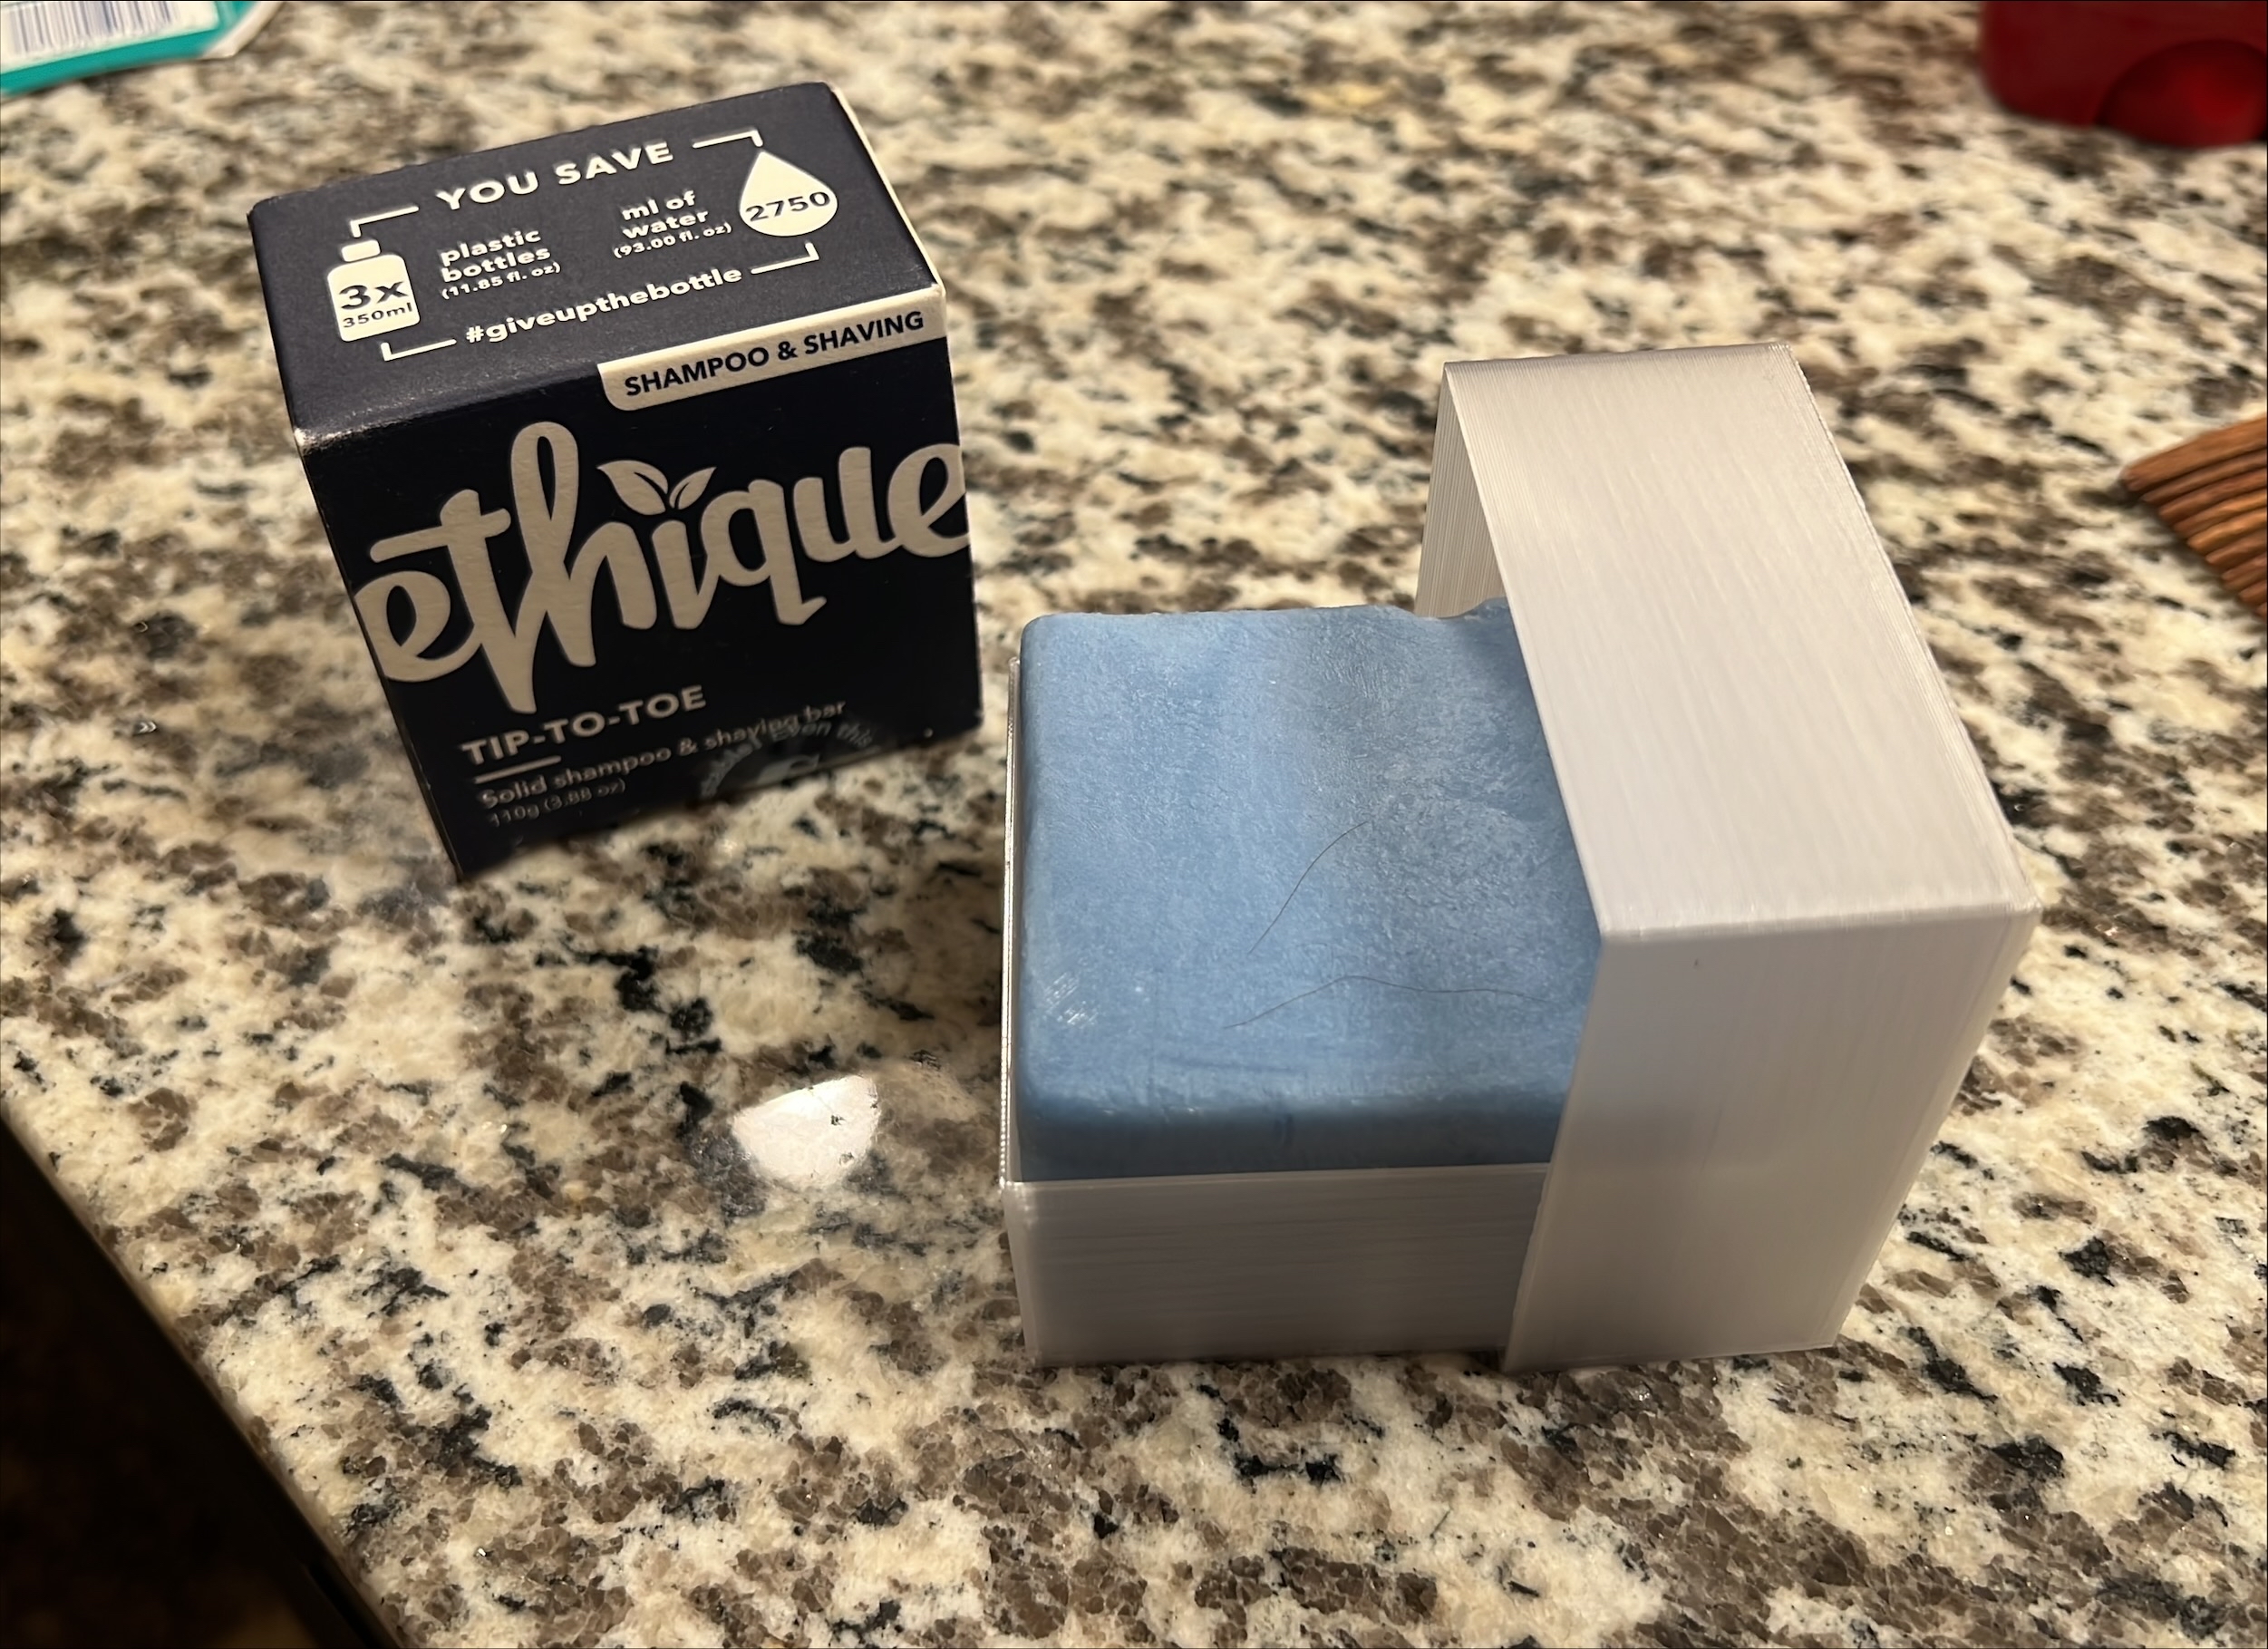 Ethique soap holder